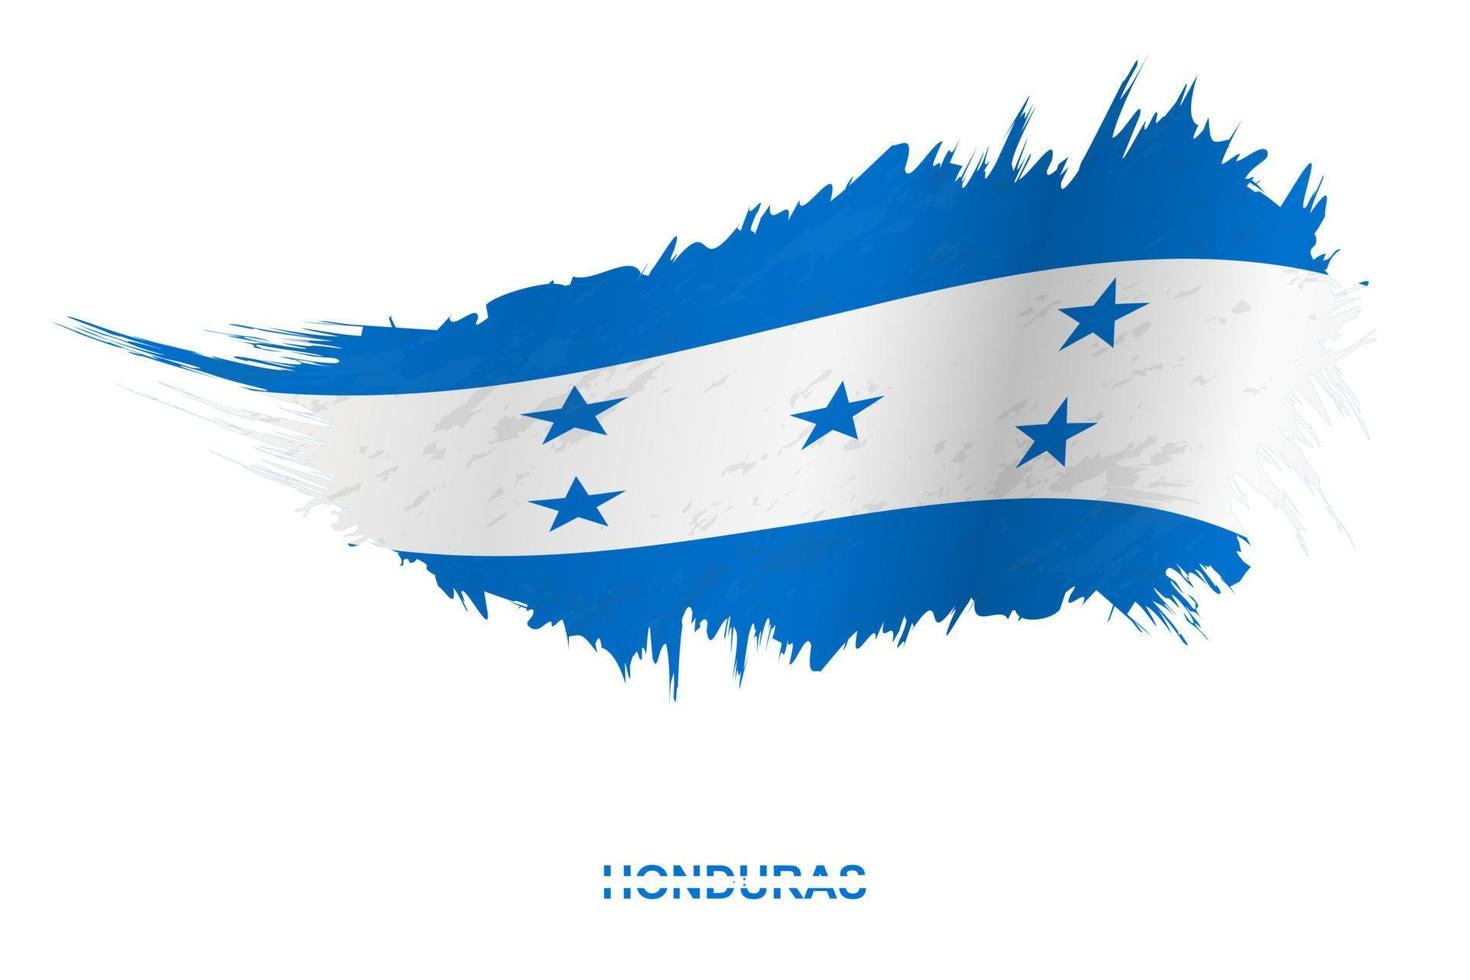 bandera de honduras en estilo grunge con efecto ondulante. vector